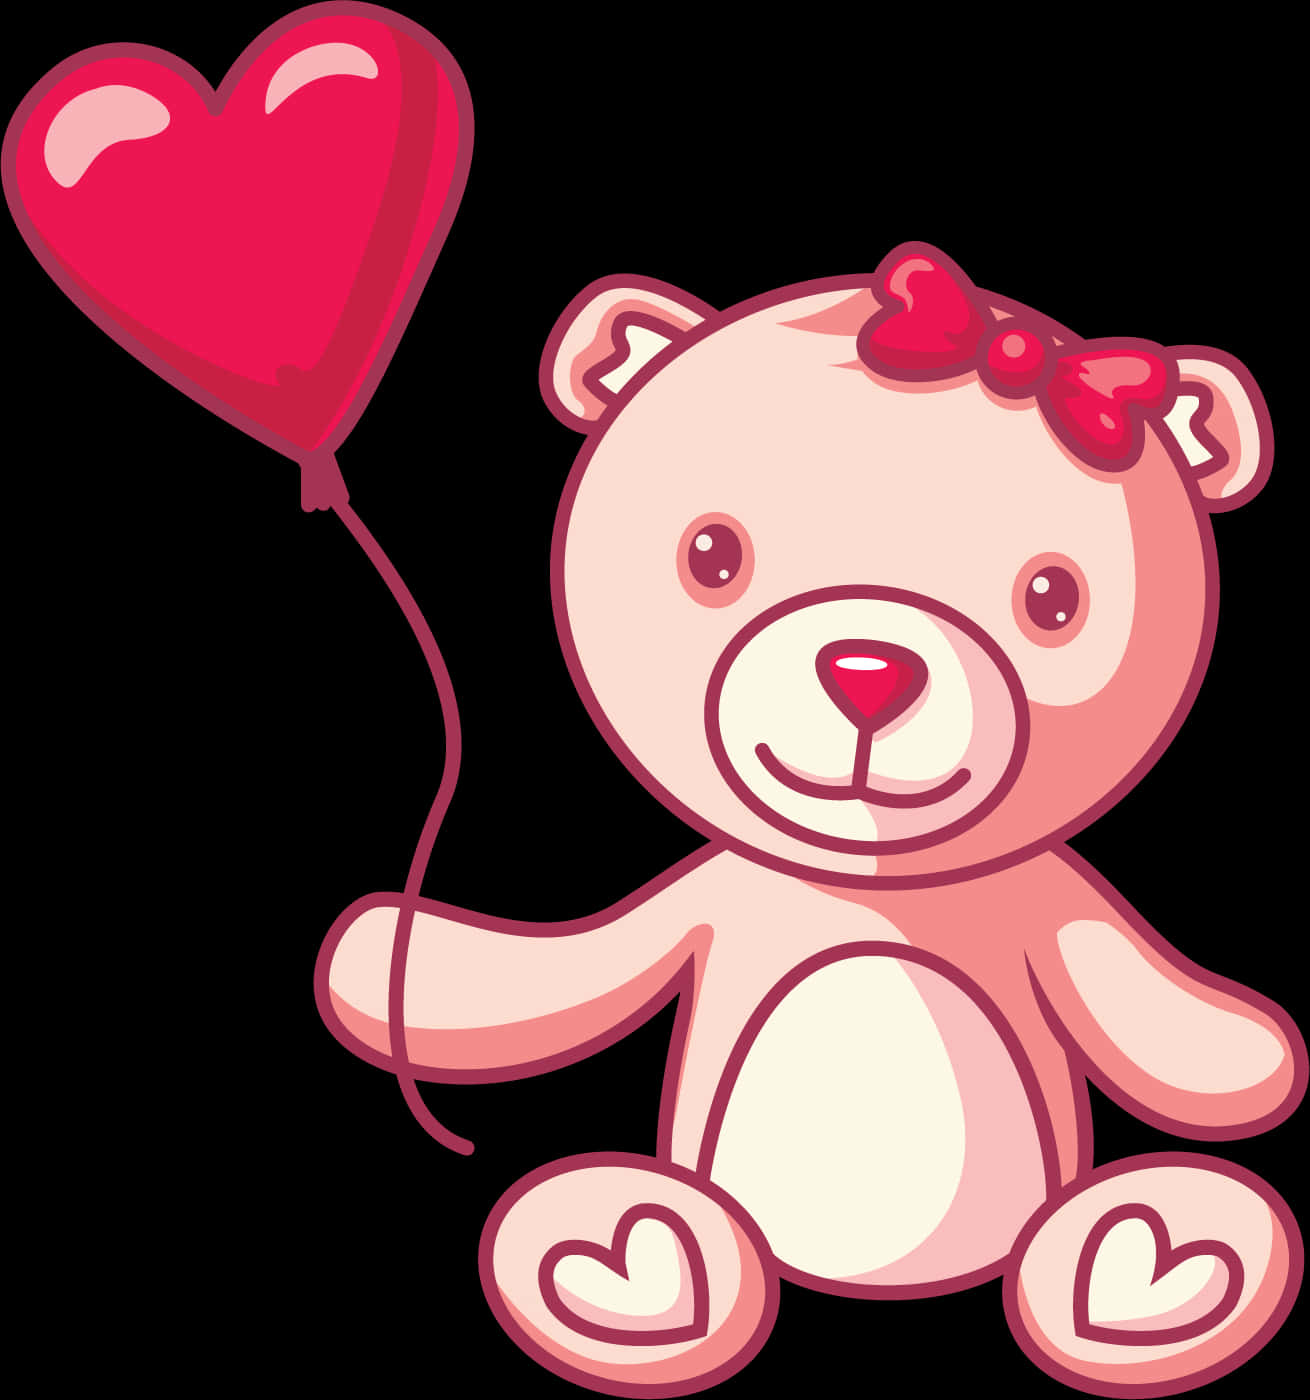 A Cartoon Of A Teddy Bear Holding A Heart Shaped Balloon